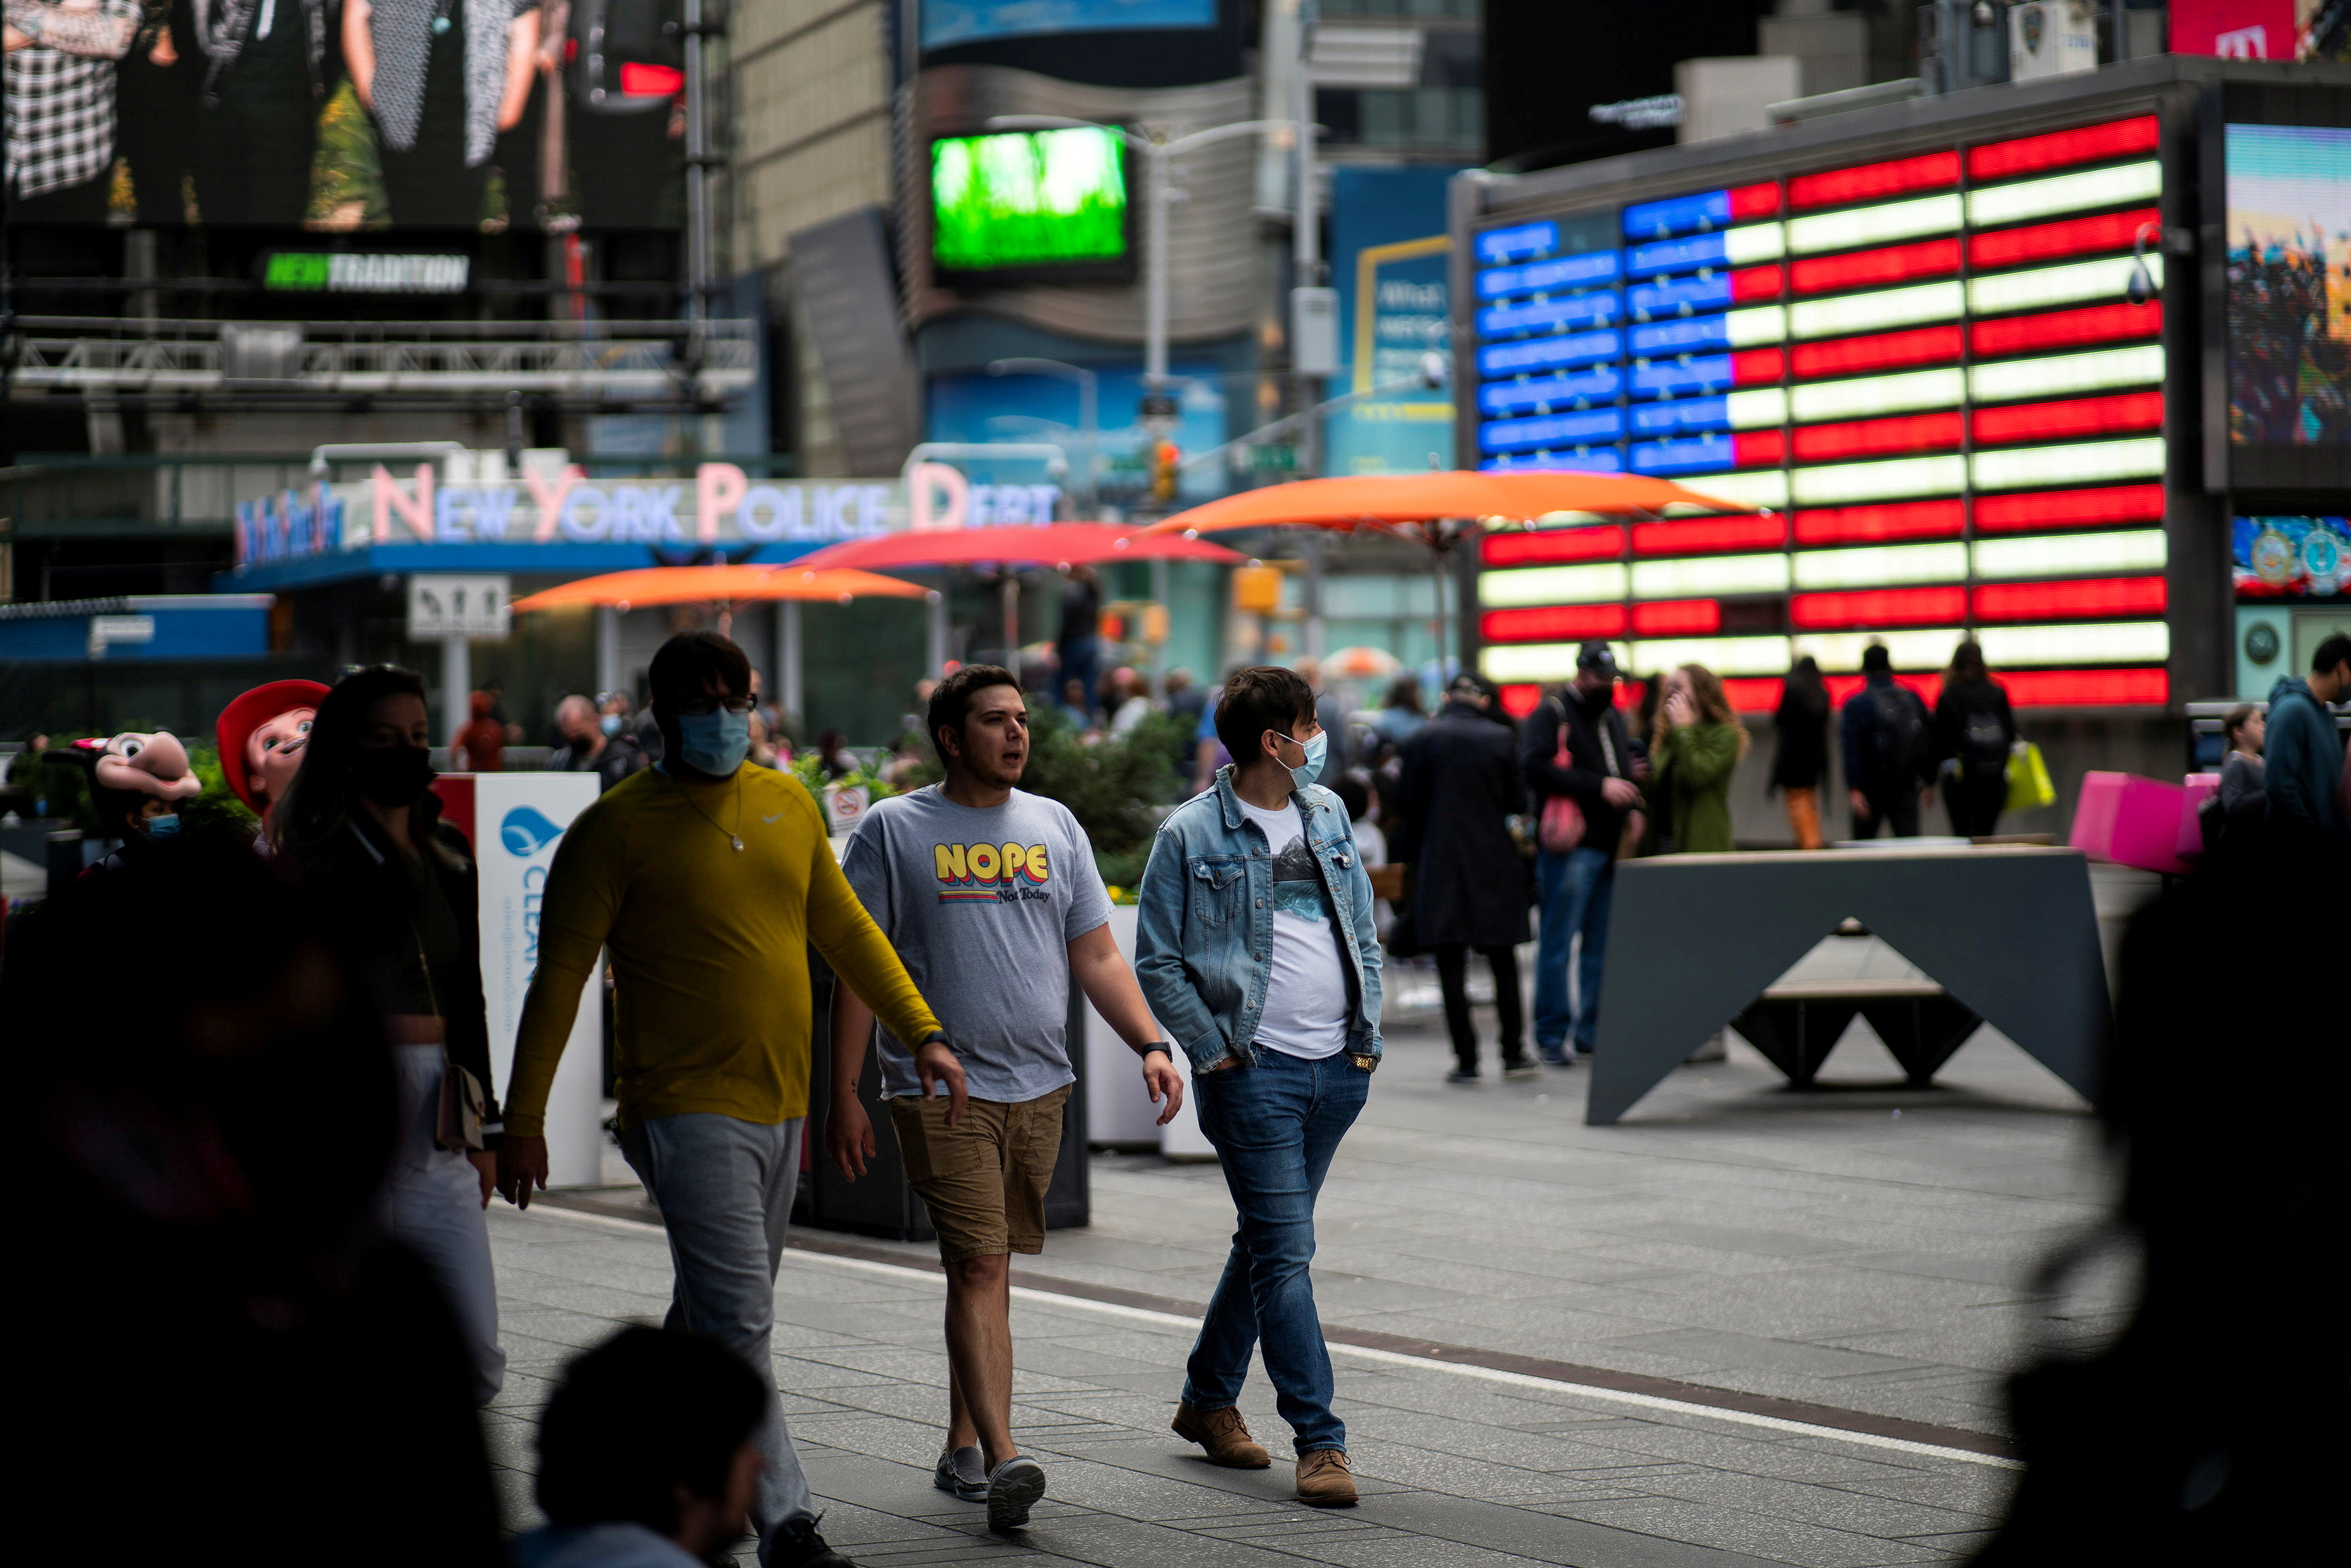 People make their way through Times Square, amid the coronavirus disease (COVID-19) pandemic, in Manhattan, New York City